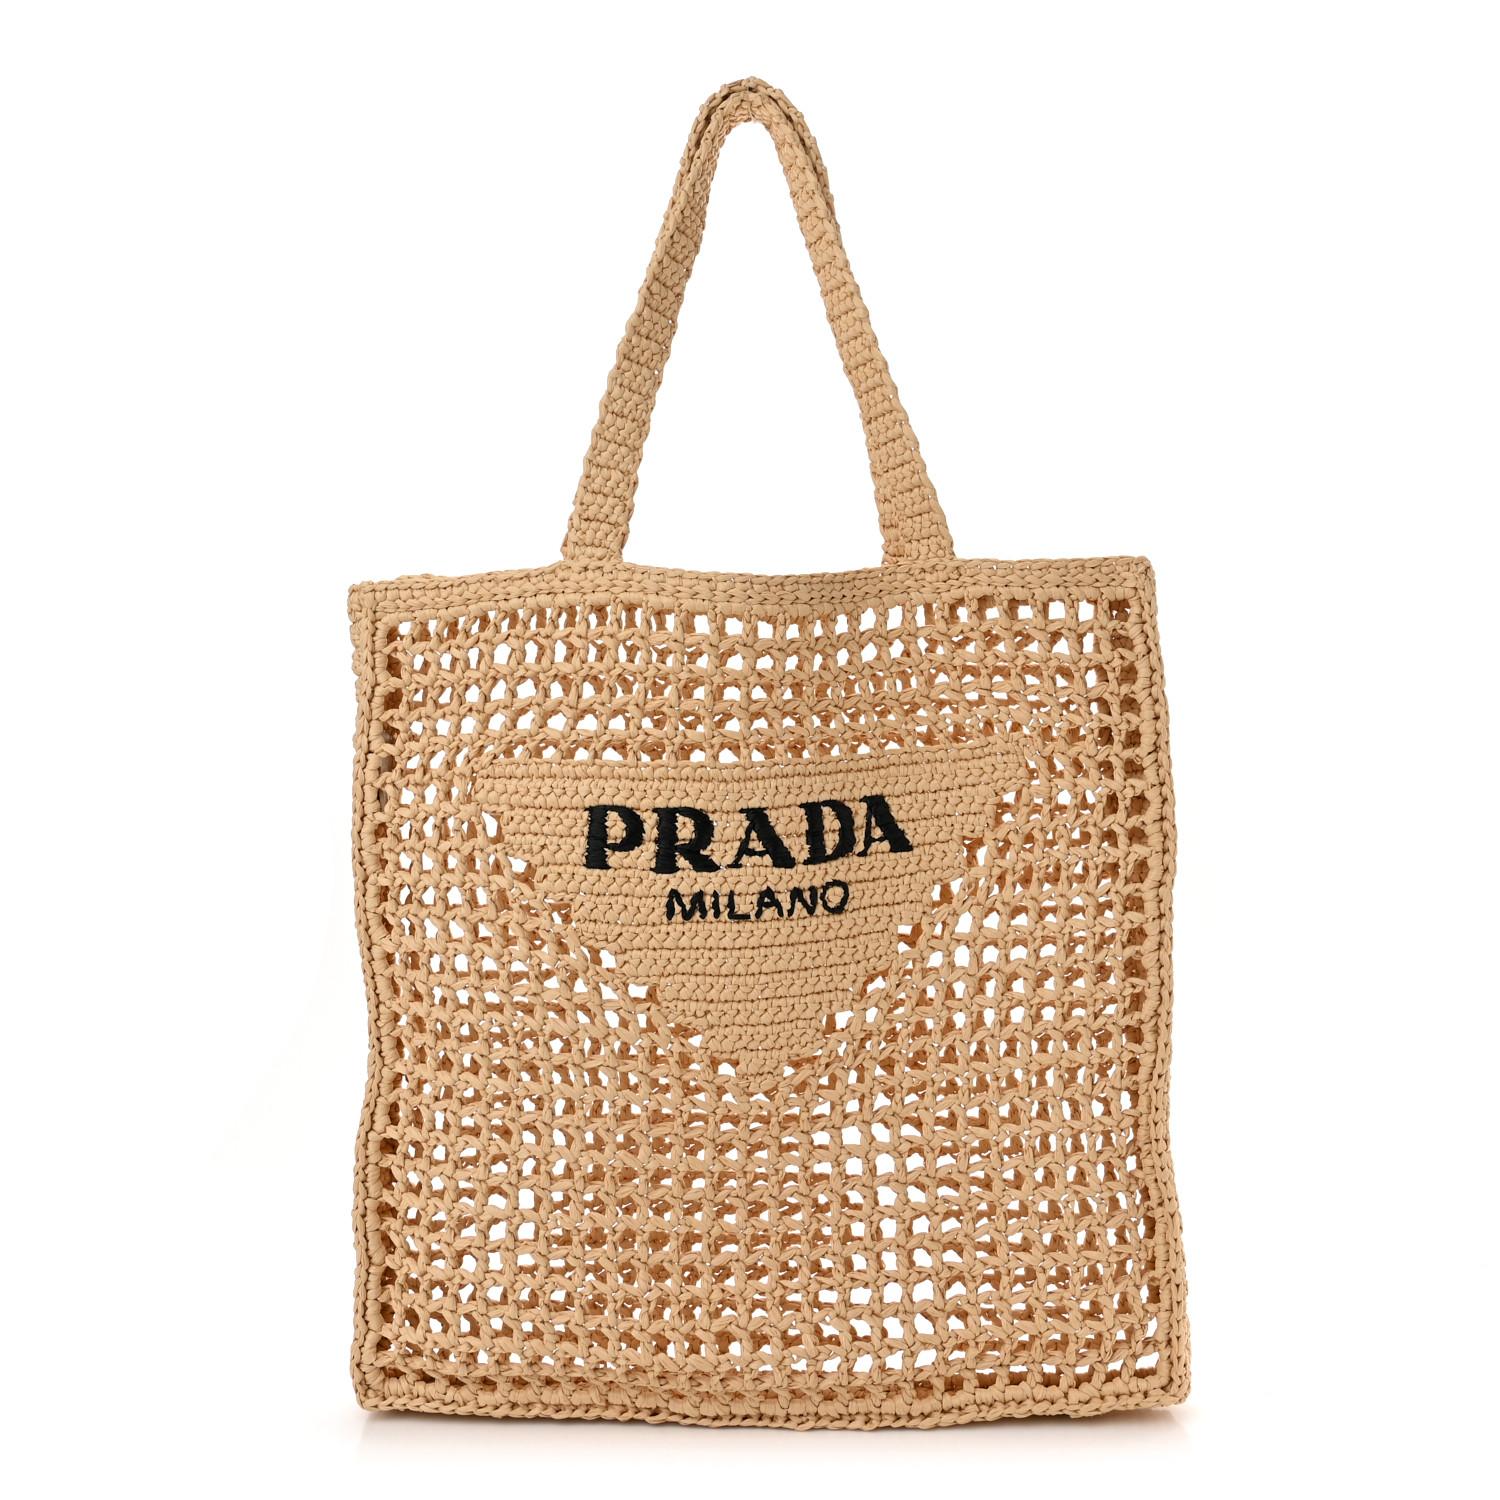 Prada Beige/Brown Raffia/Leather Basket Tote Bag